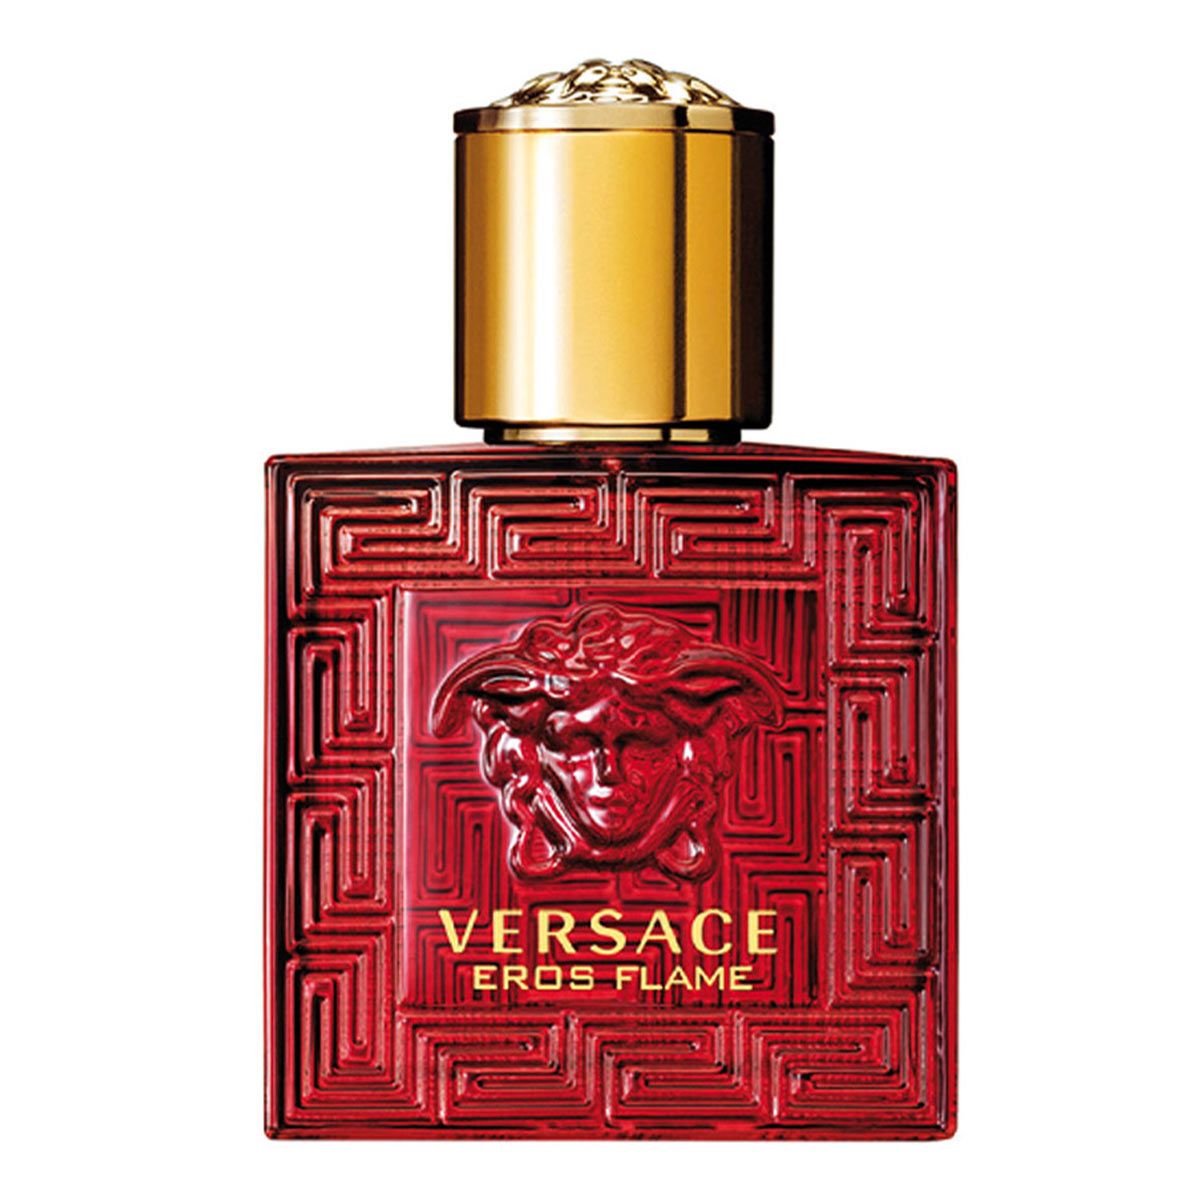  Versace Eros Flame 